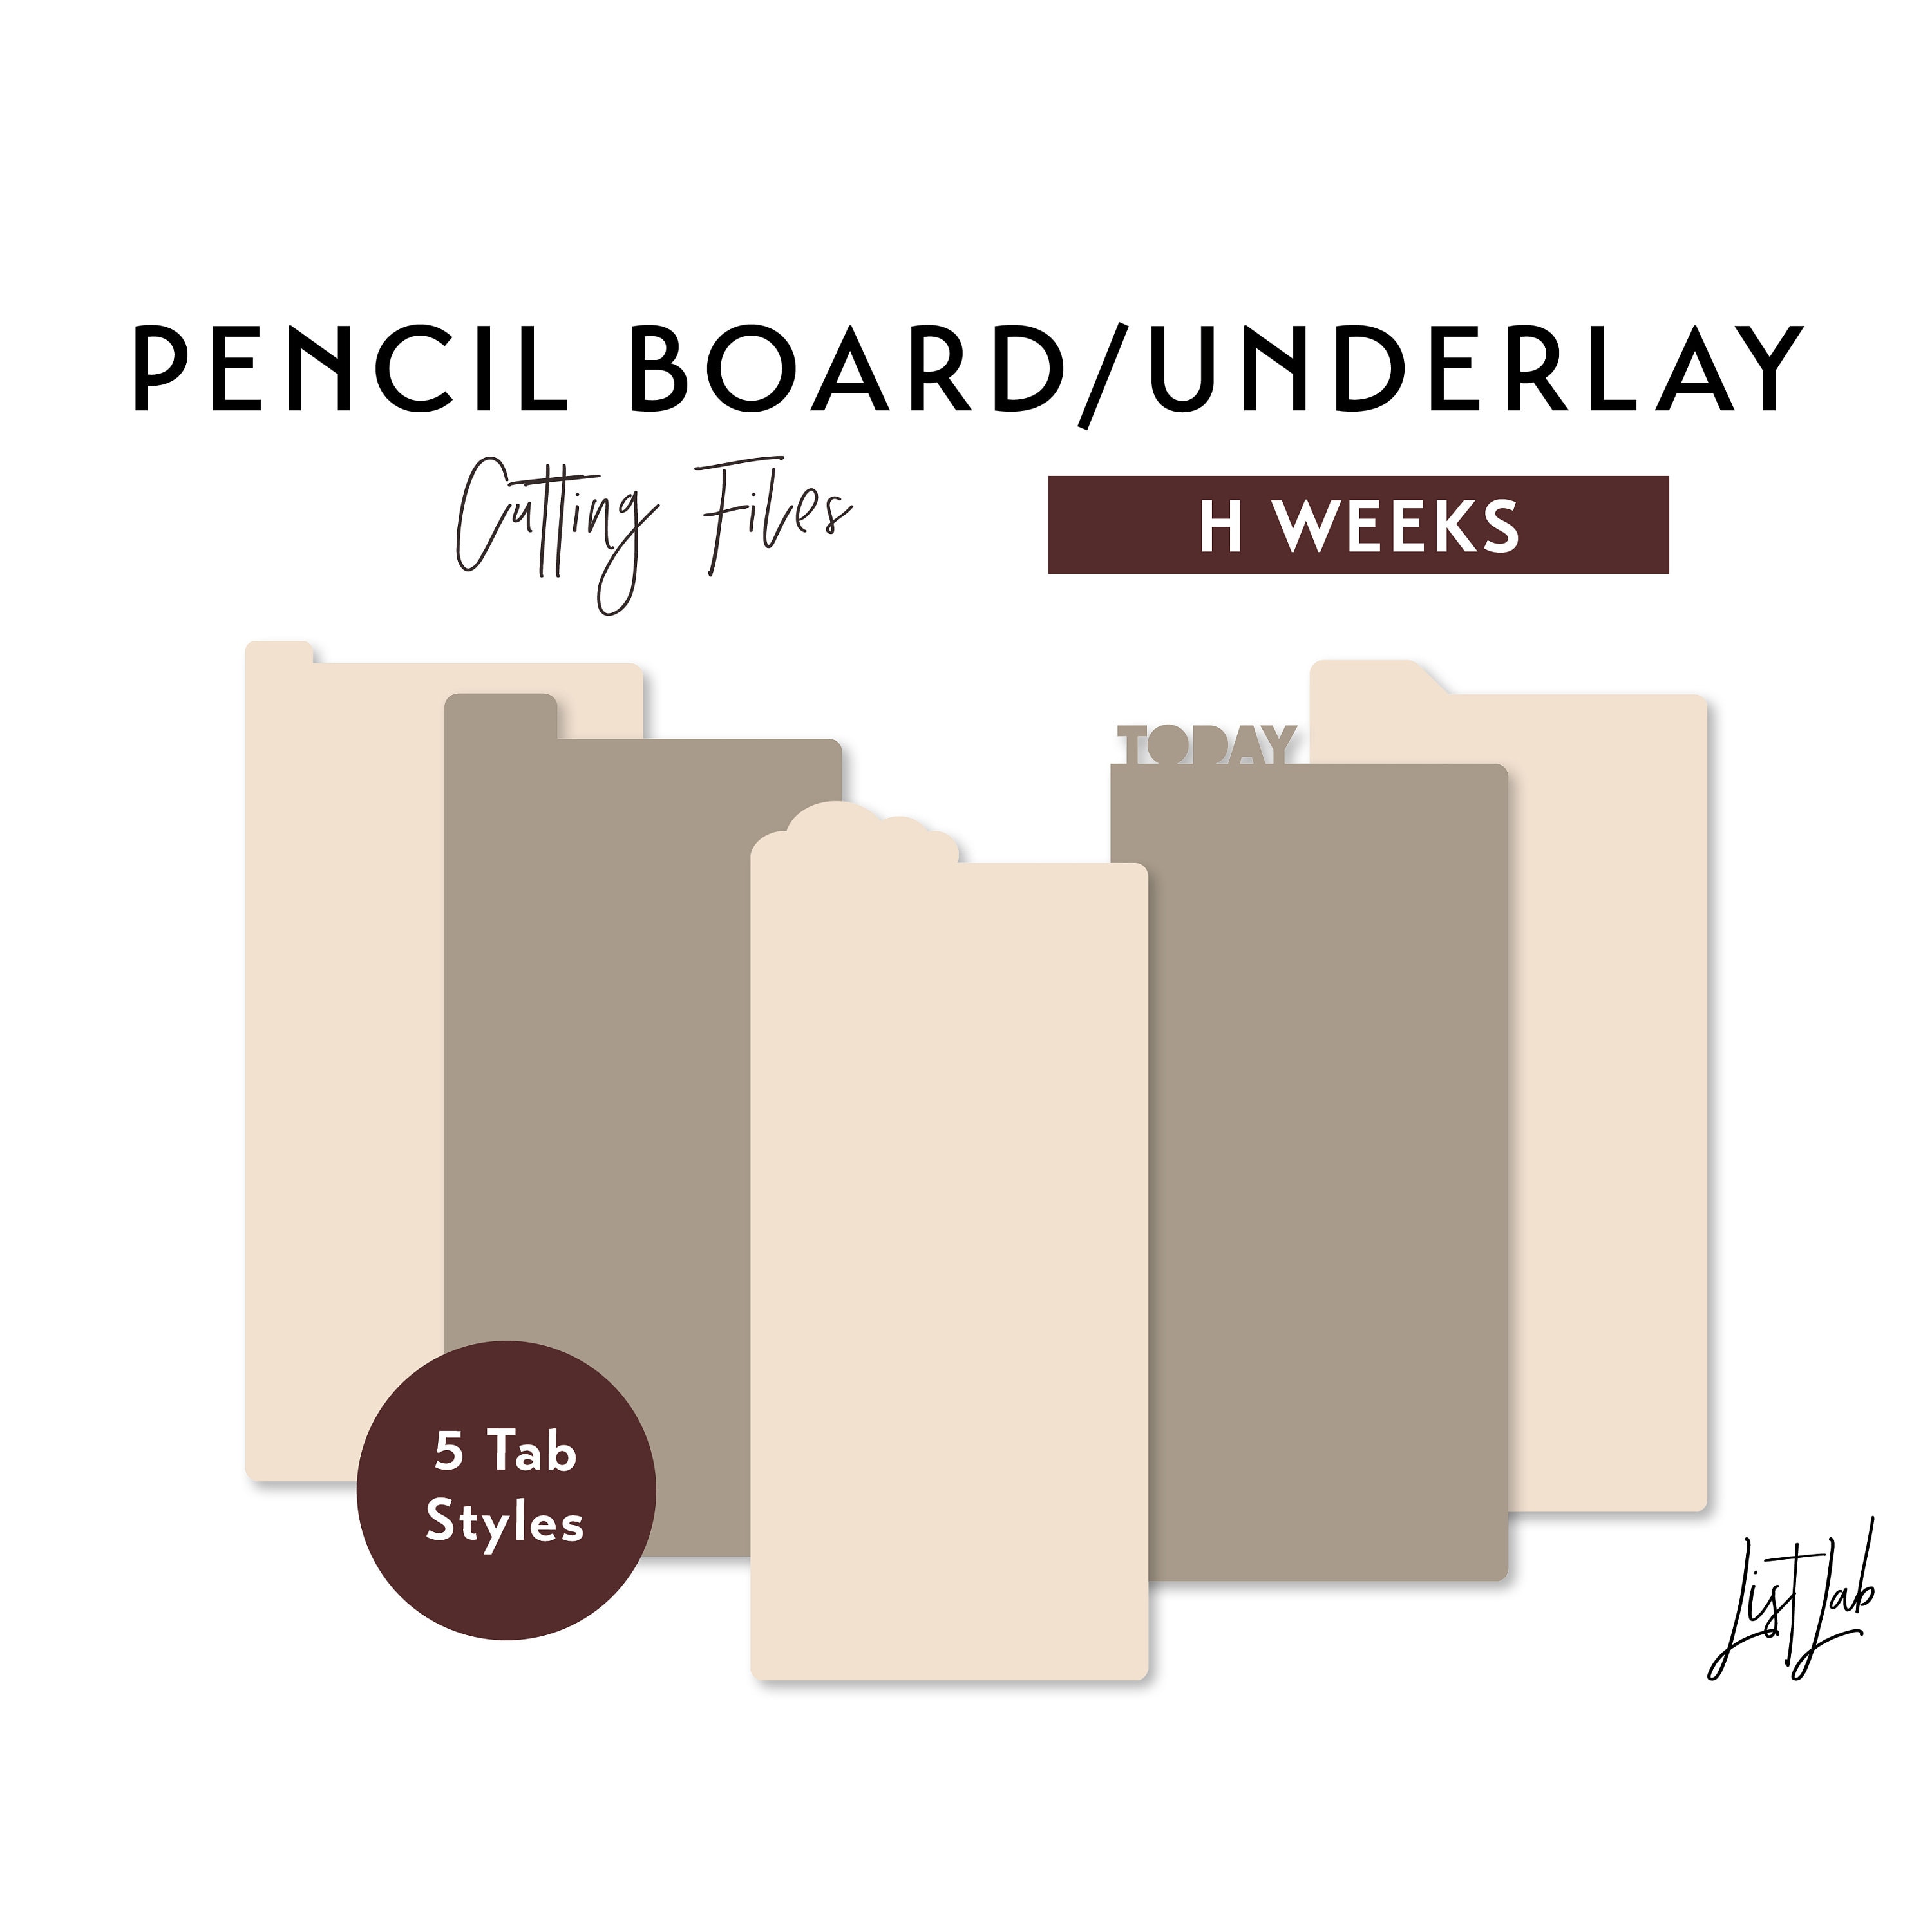 Pencil Board PRINTABLE Grid Hobonichi Weeks Shitajiki 下敷きunder-sheet 